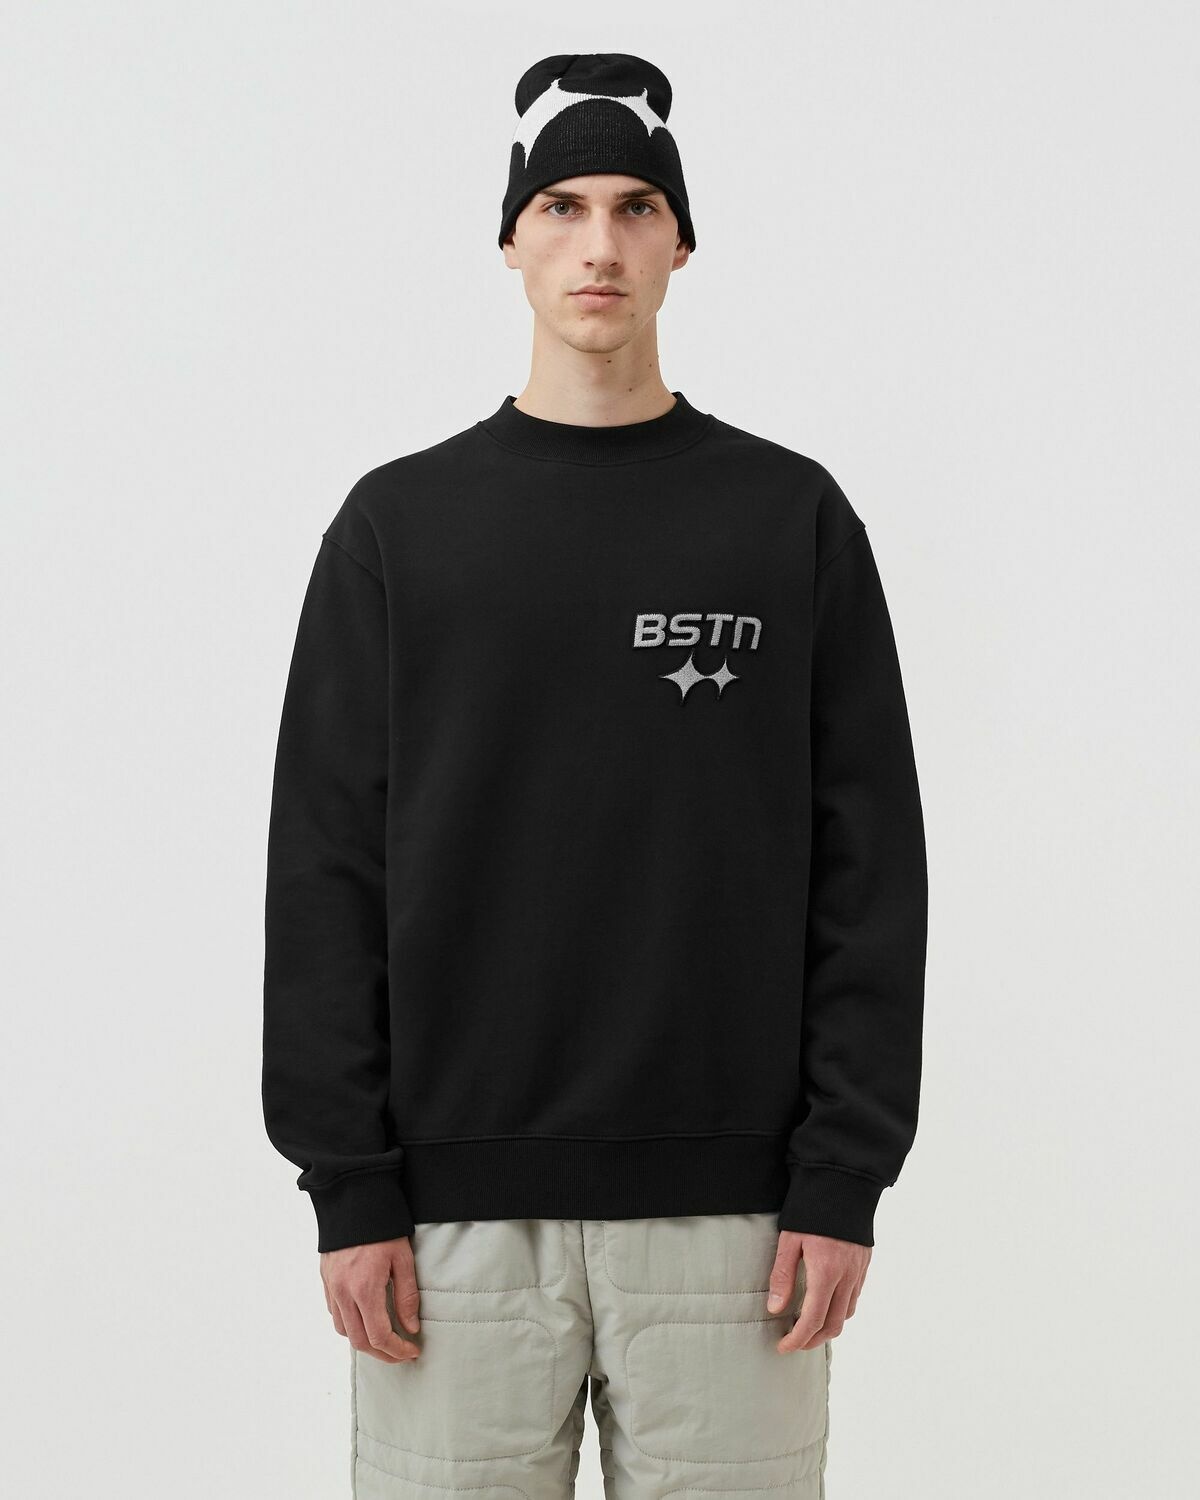 Bstn Brand Logo Crewneck Black - Mens - Sweatshirts